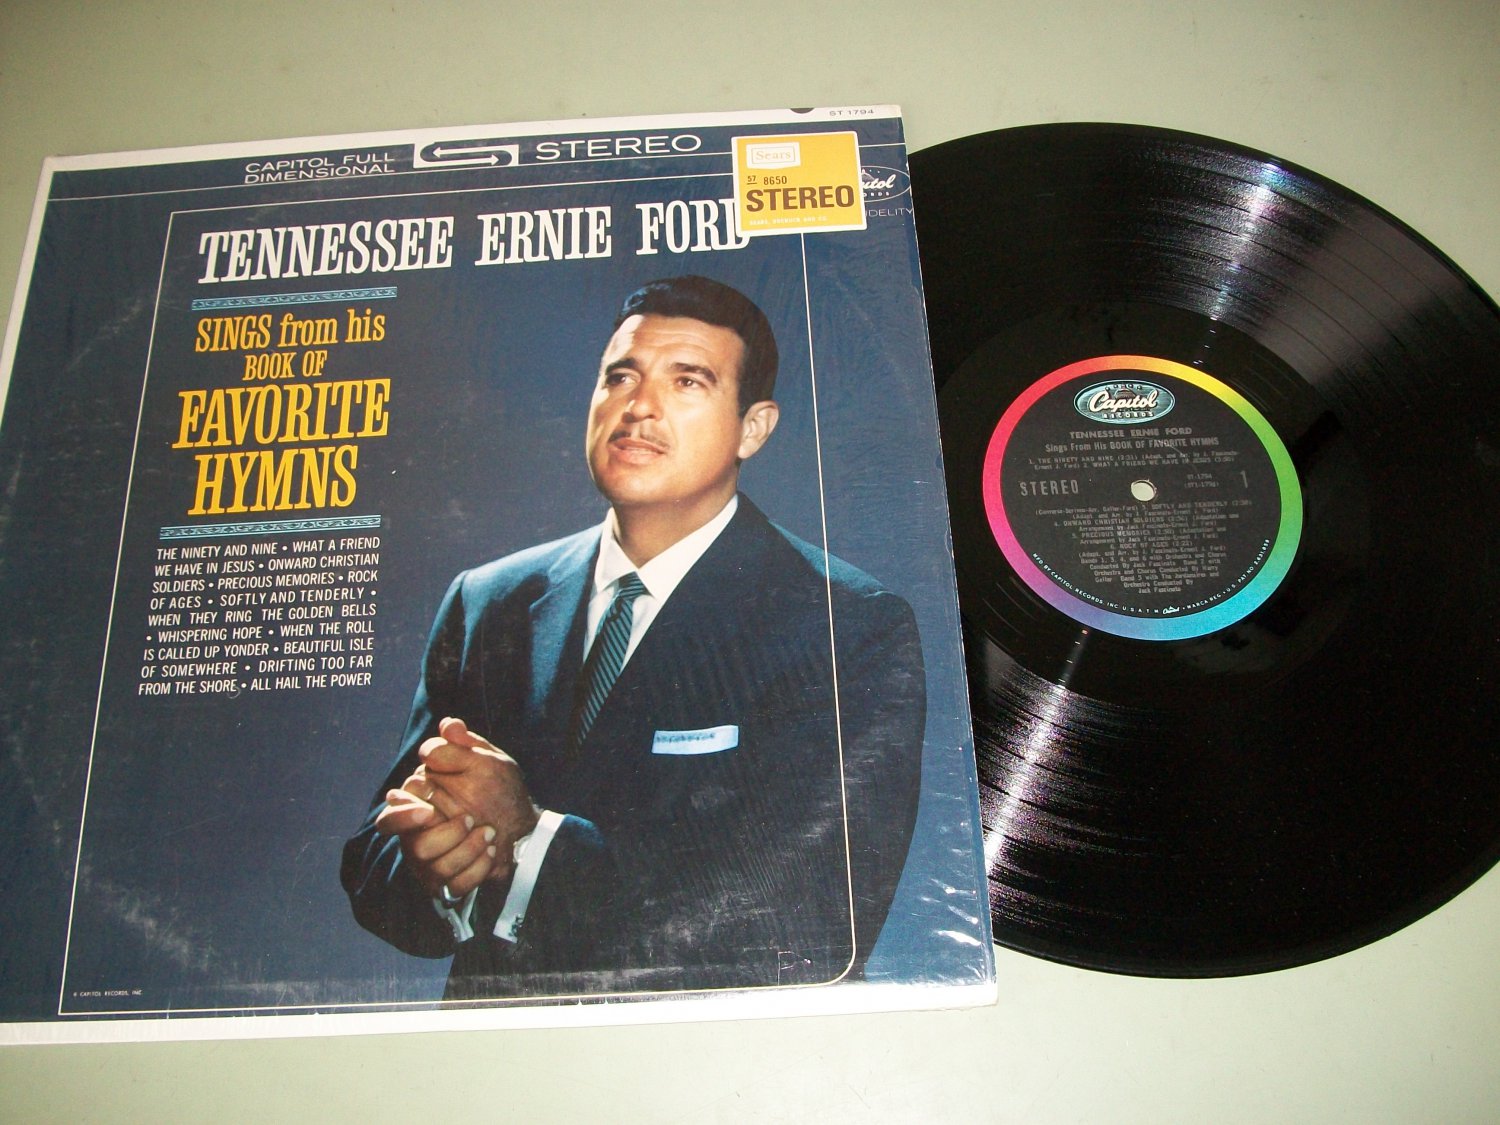 Tennessee ernie ford hymns lp #1